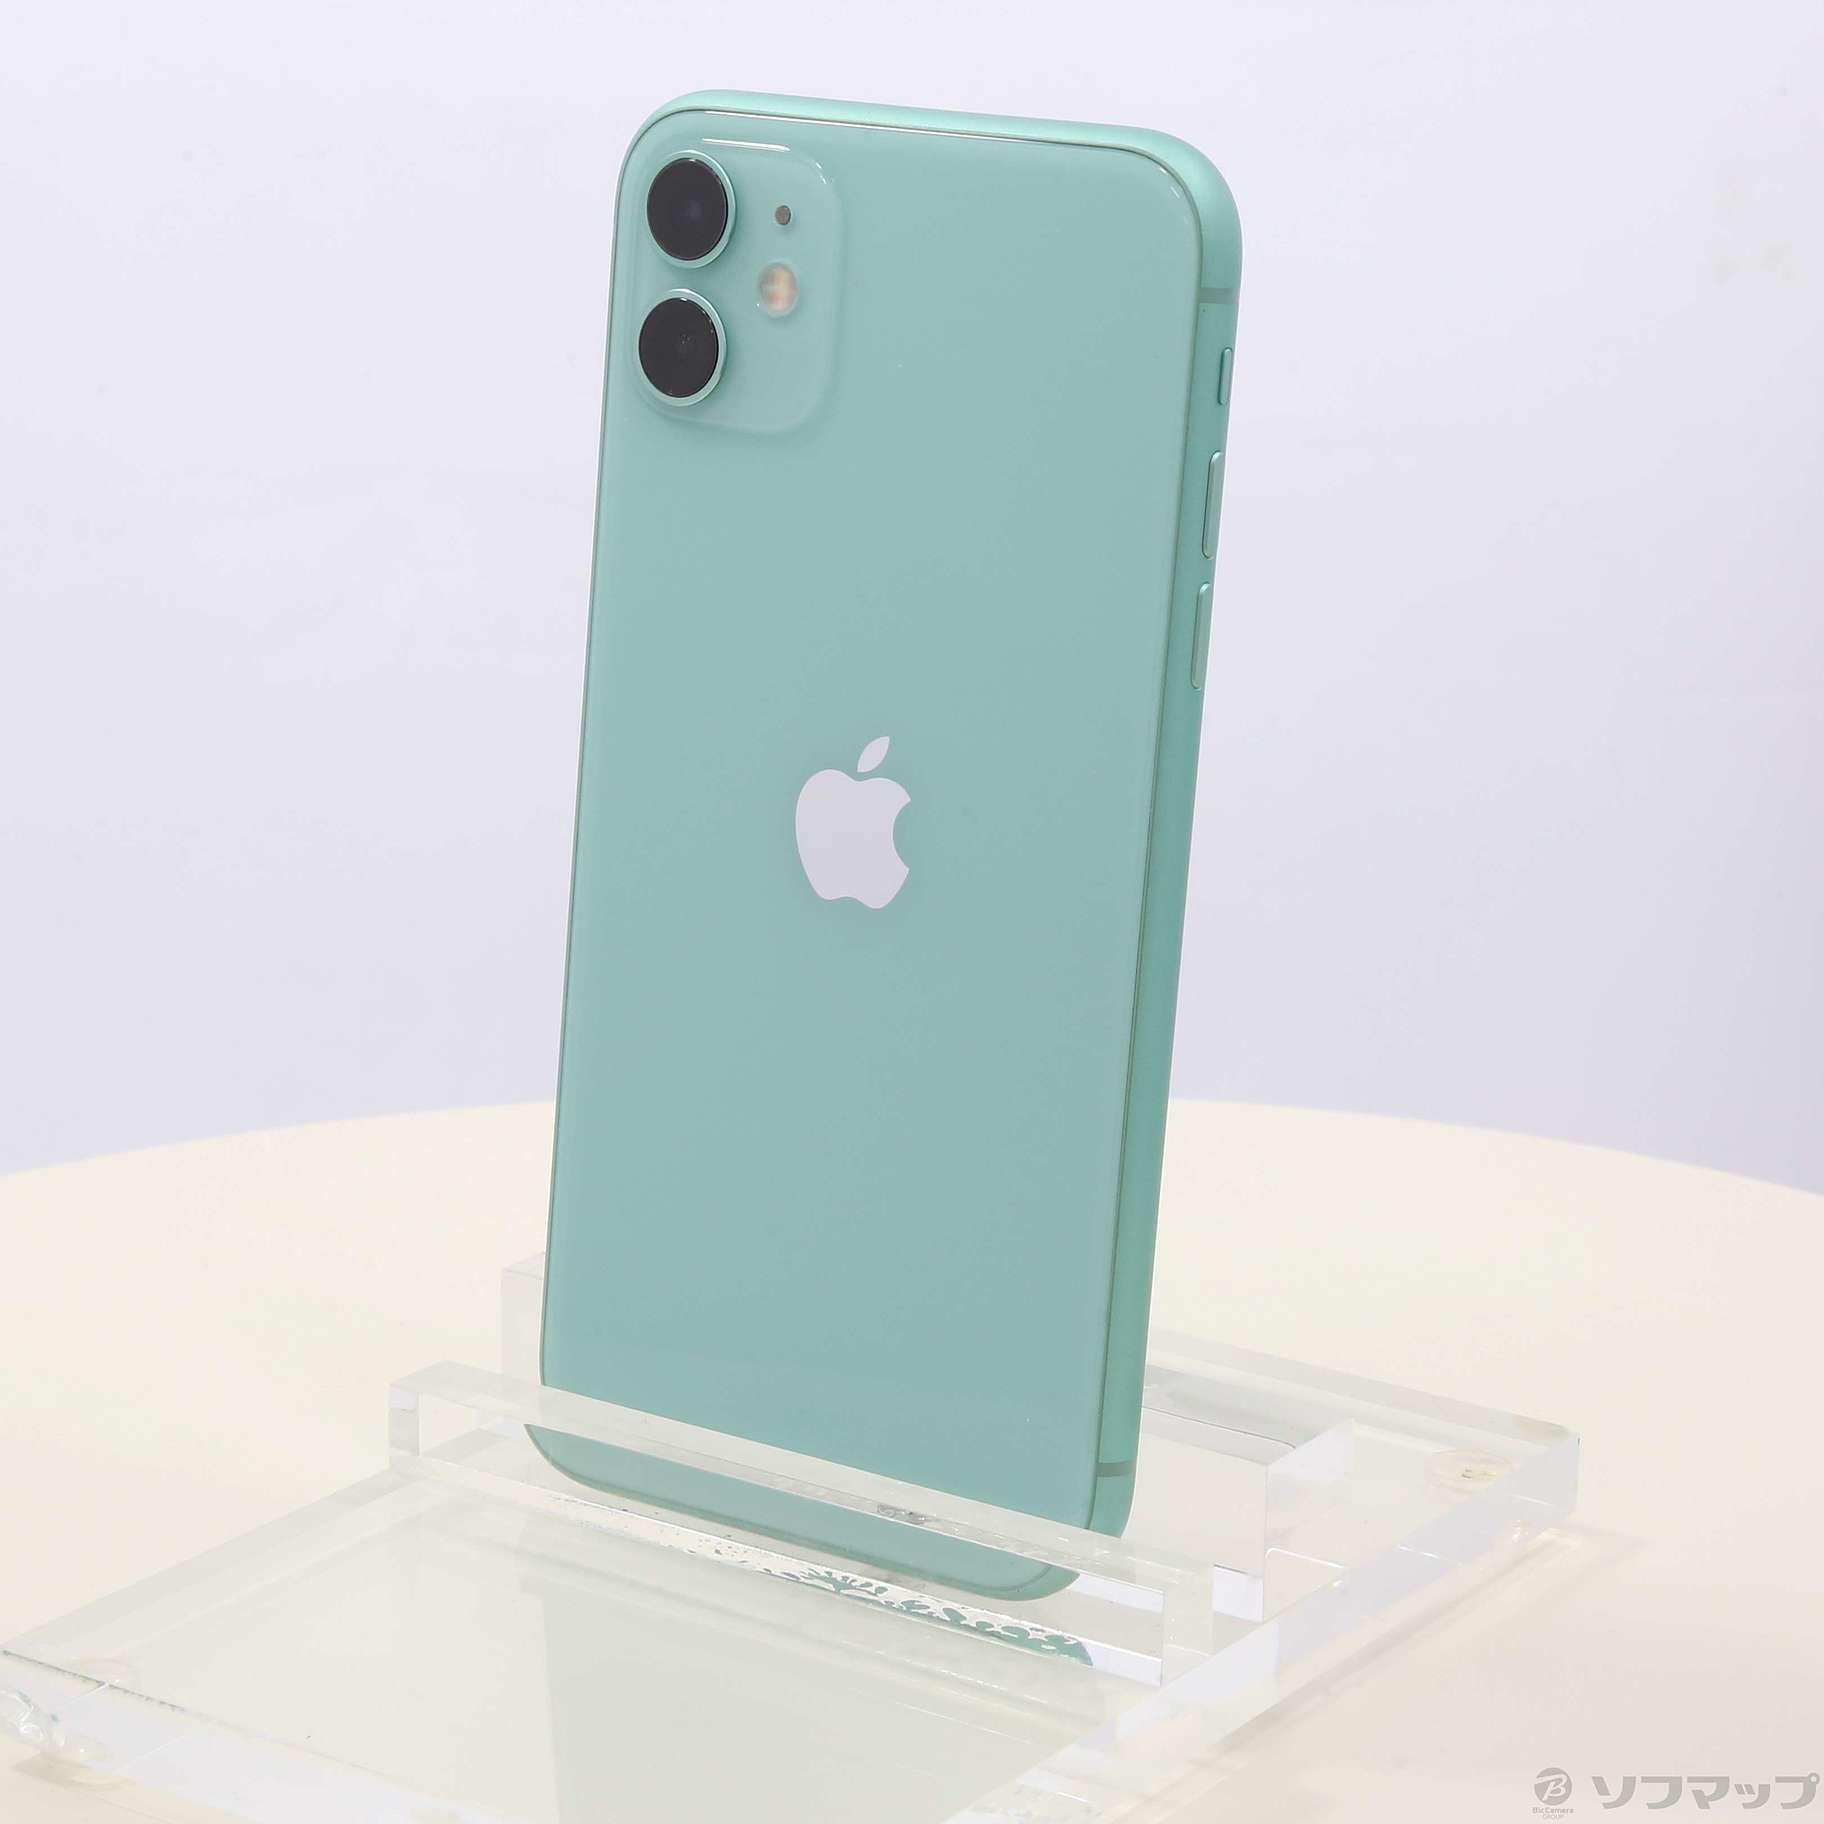 iPhone11 64G Green